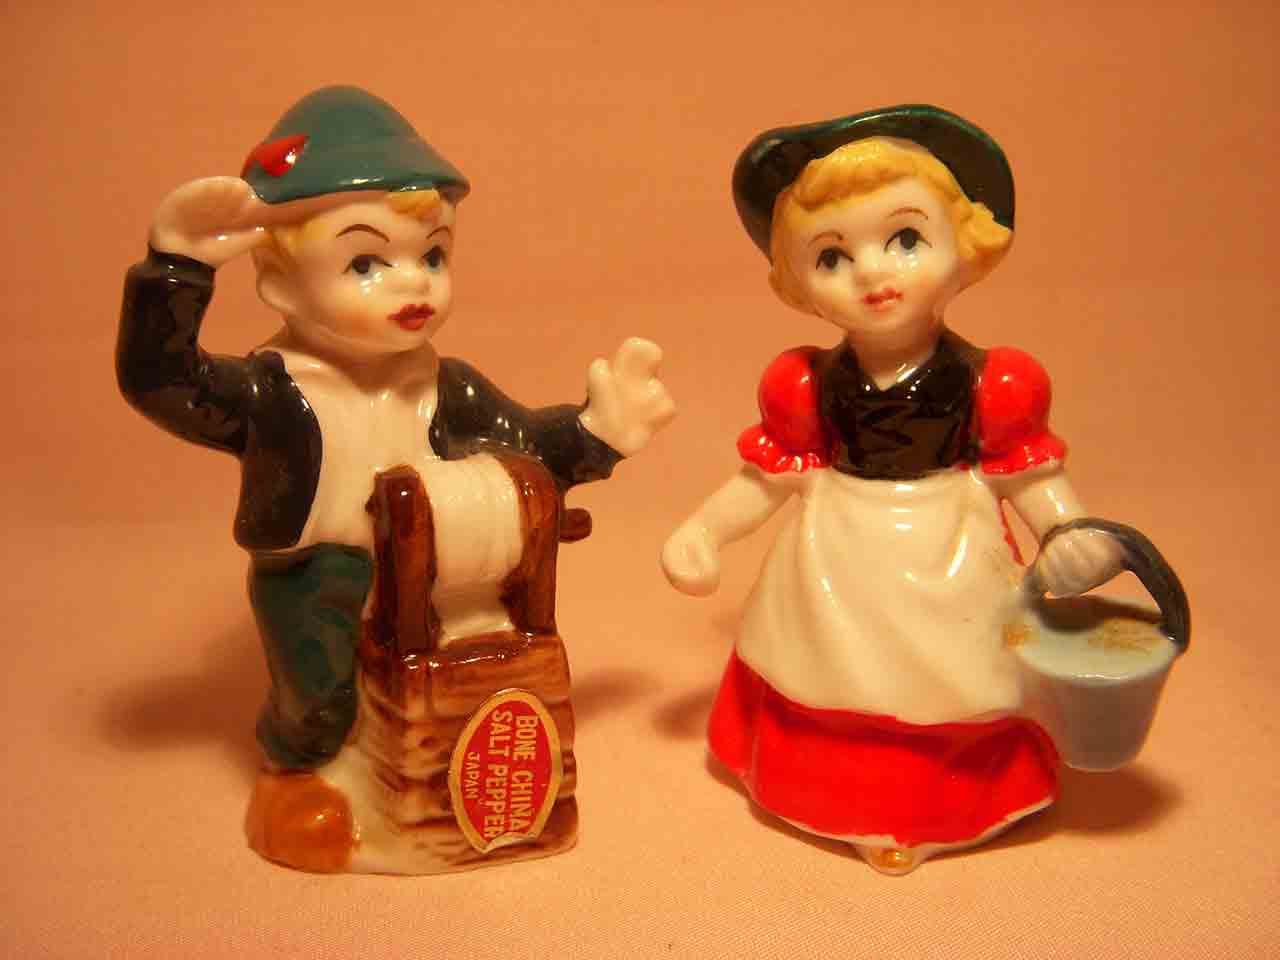 Bone China miniature nursery rhymes salt and pepper shakers - Jack and Jill